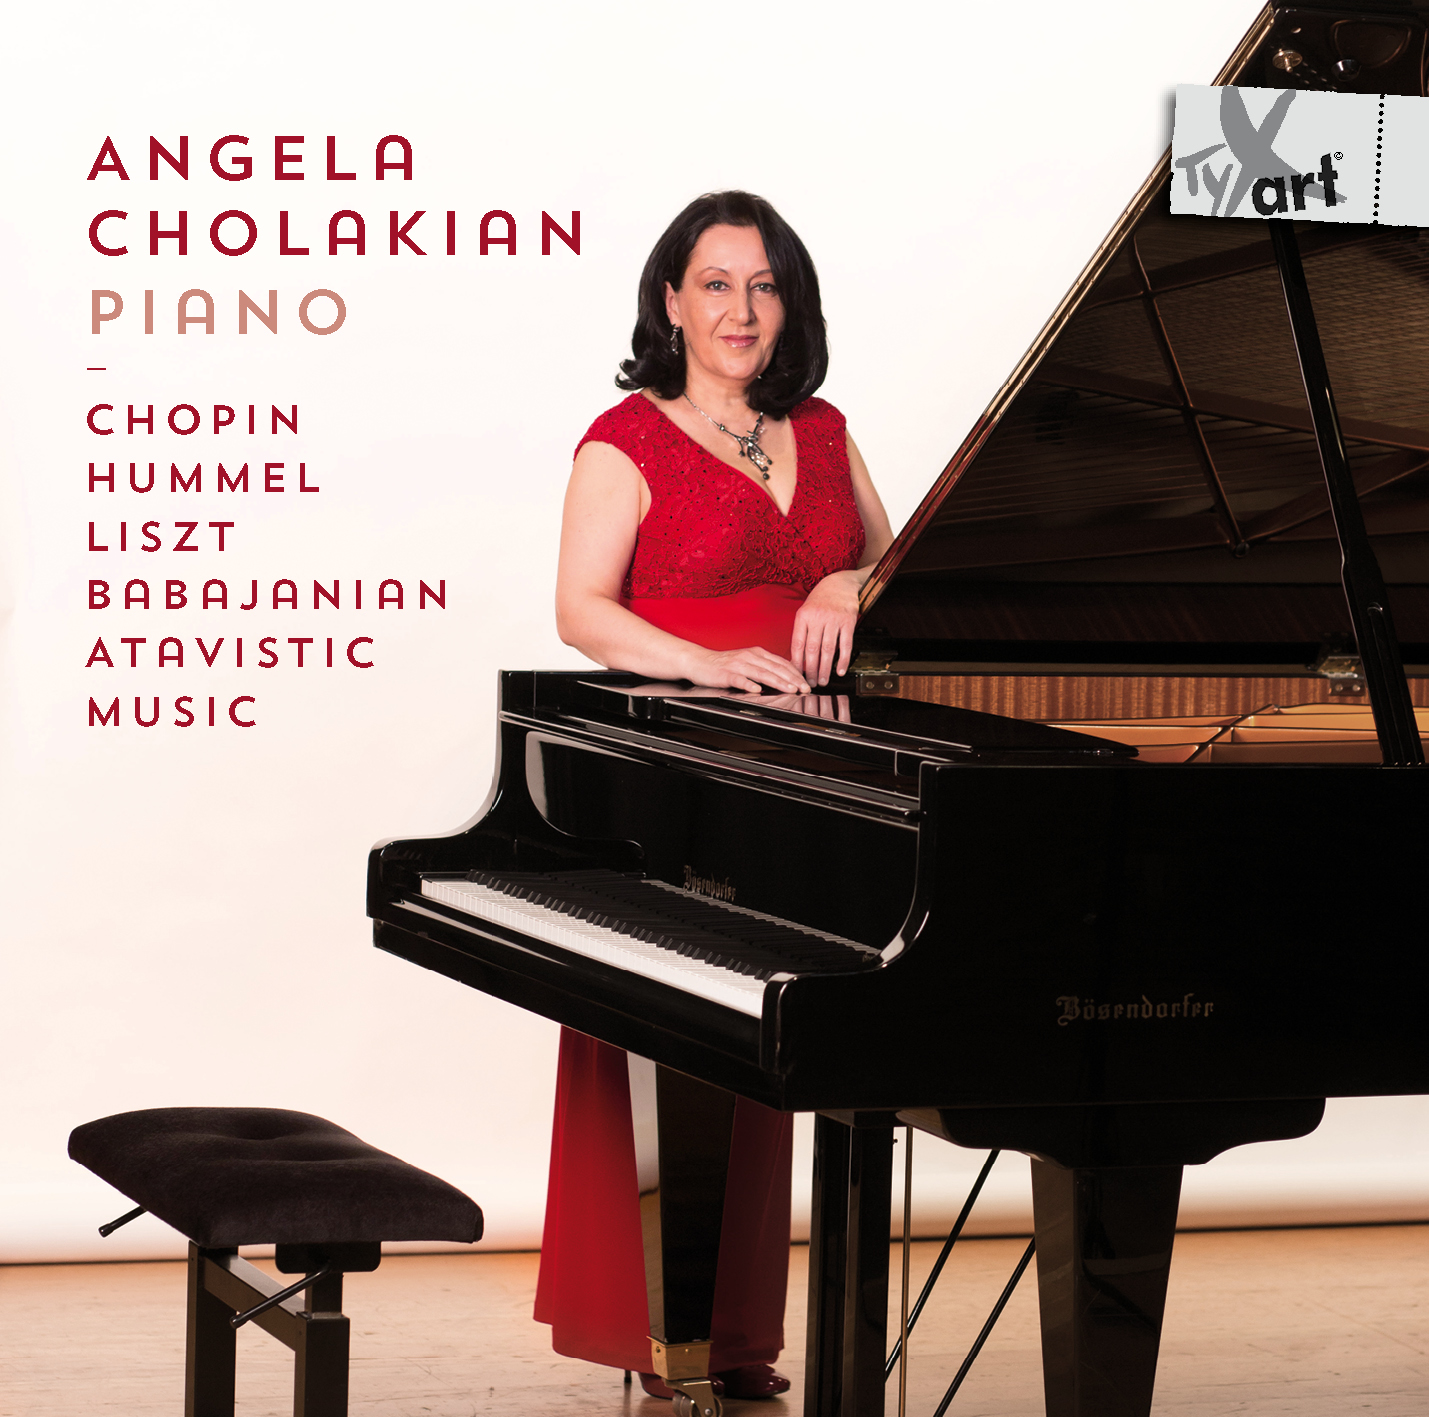 Angela Cholakian, Piano: Babajanian, Chopin, Liszt, Hummel, and Atavistic Music